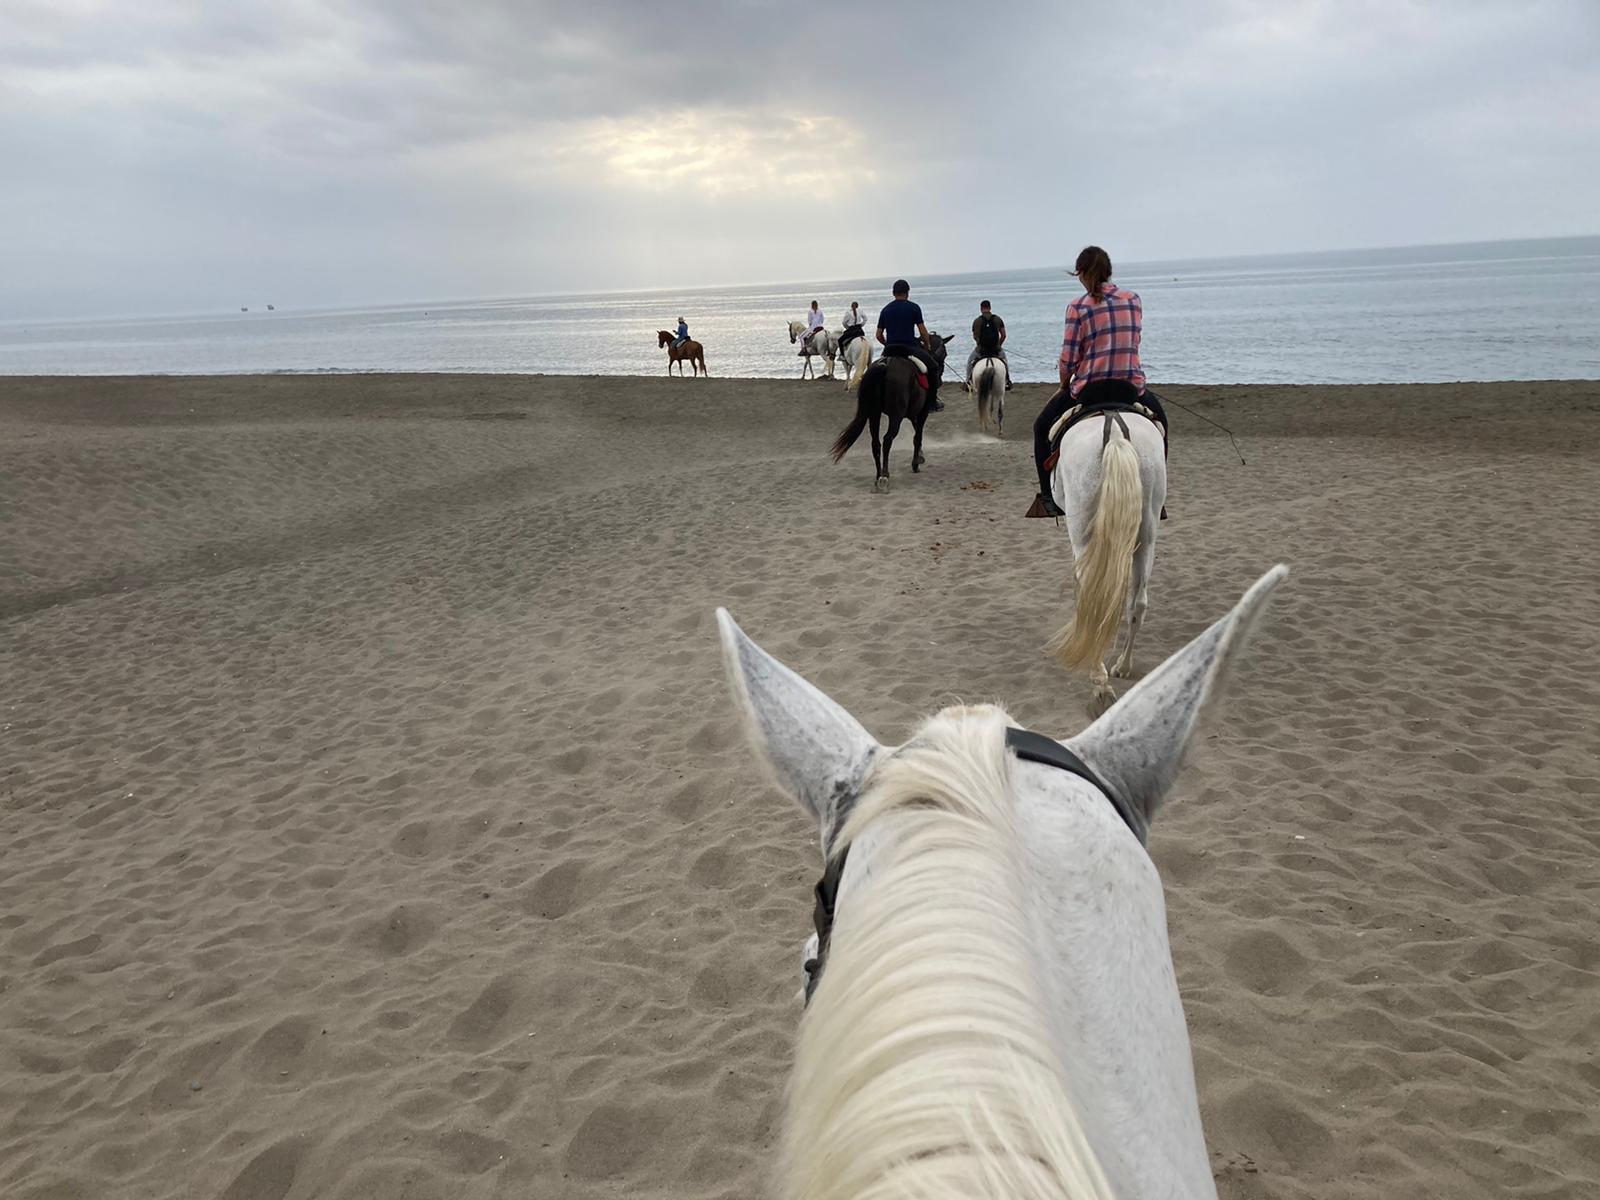 horseback rides on the beach torremolinos malaga